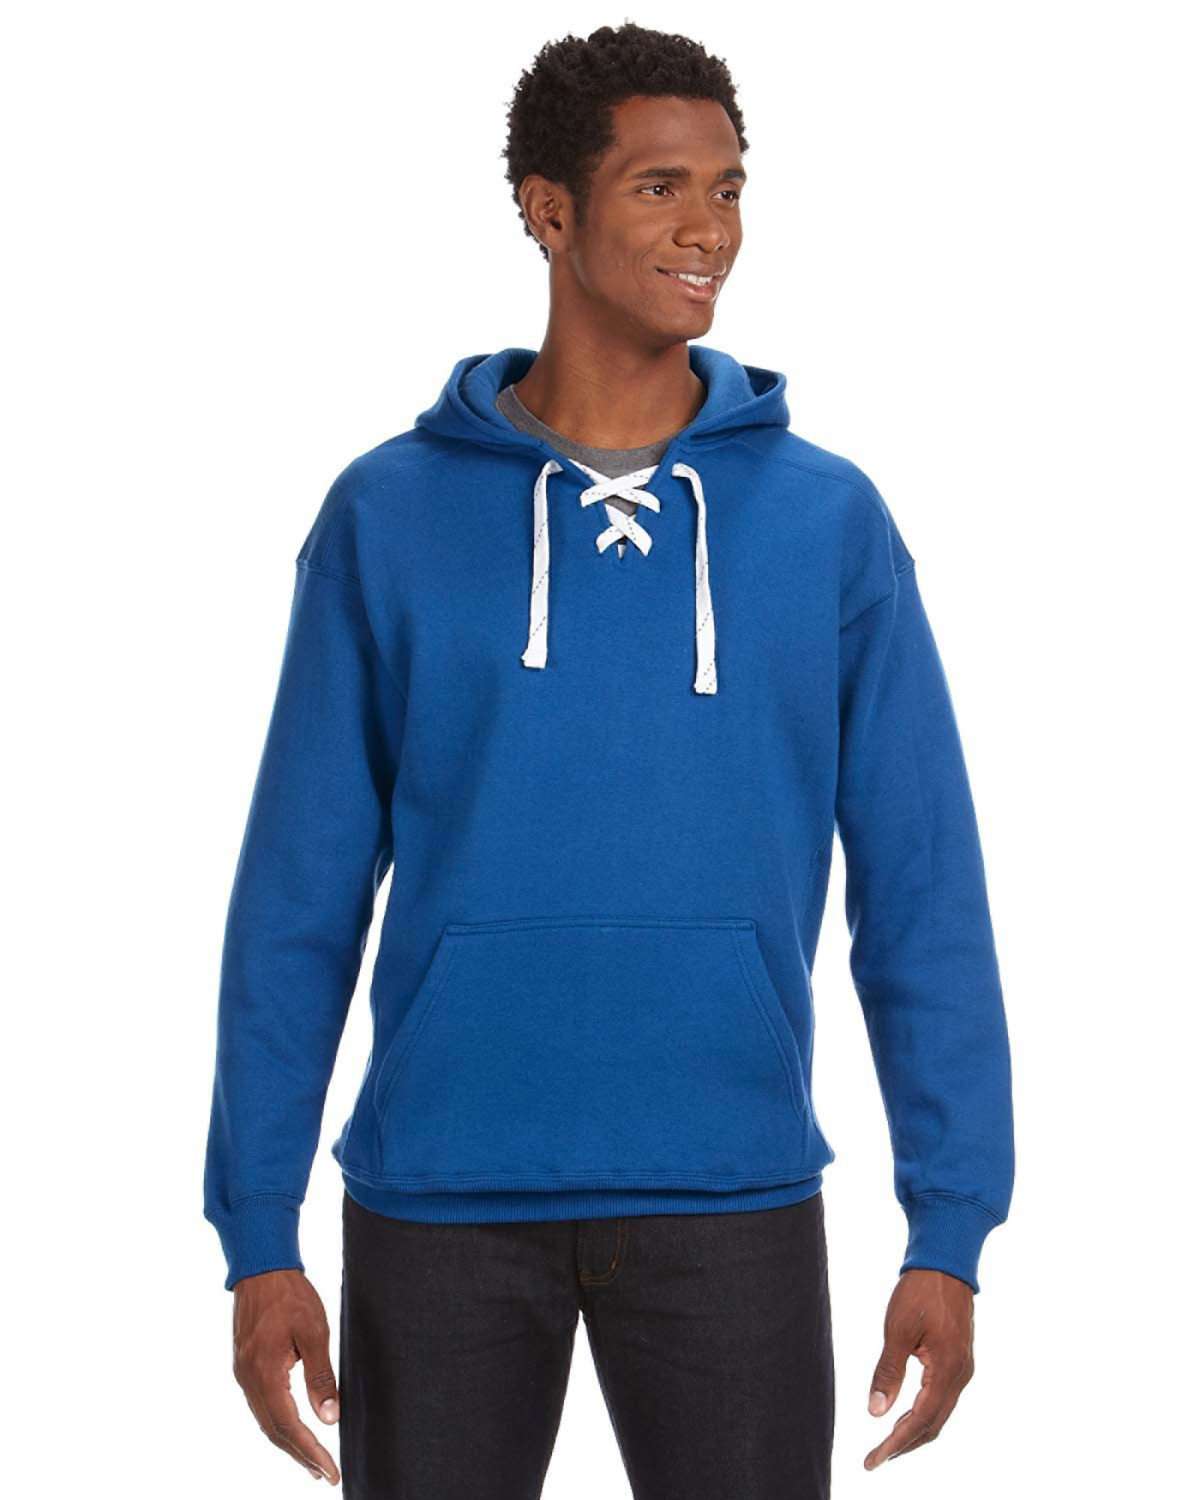 Sweatshirt Hooded Hockey Style Sweatshirt - J America - Style JA8830Fire Department Clothing